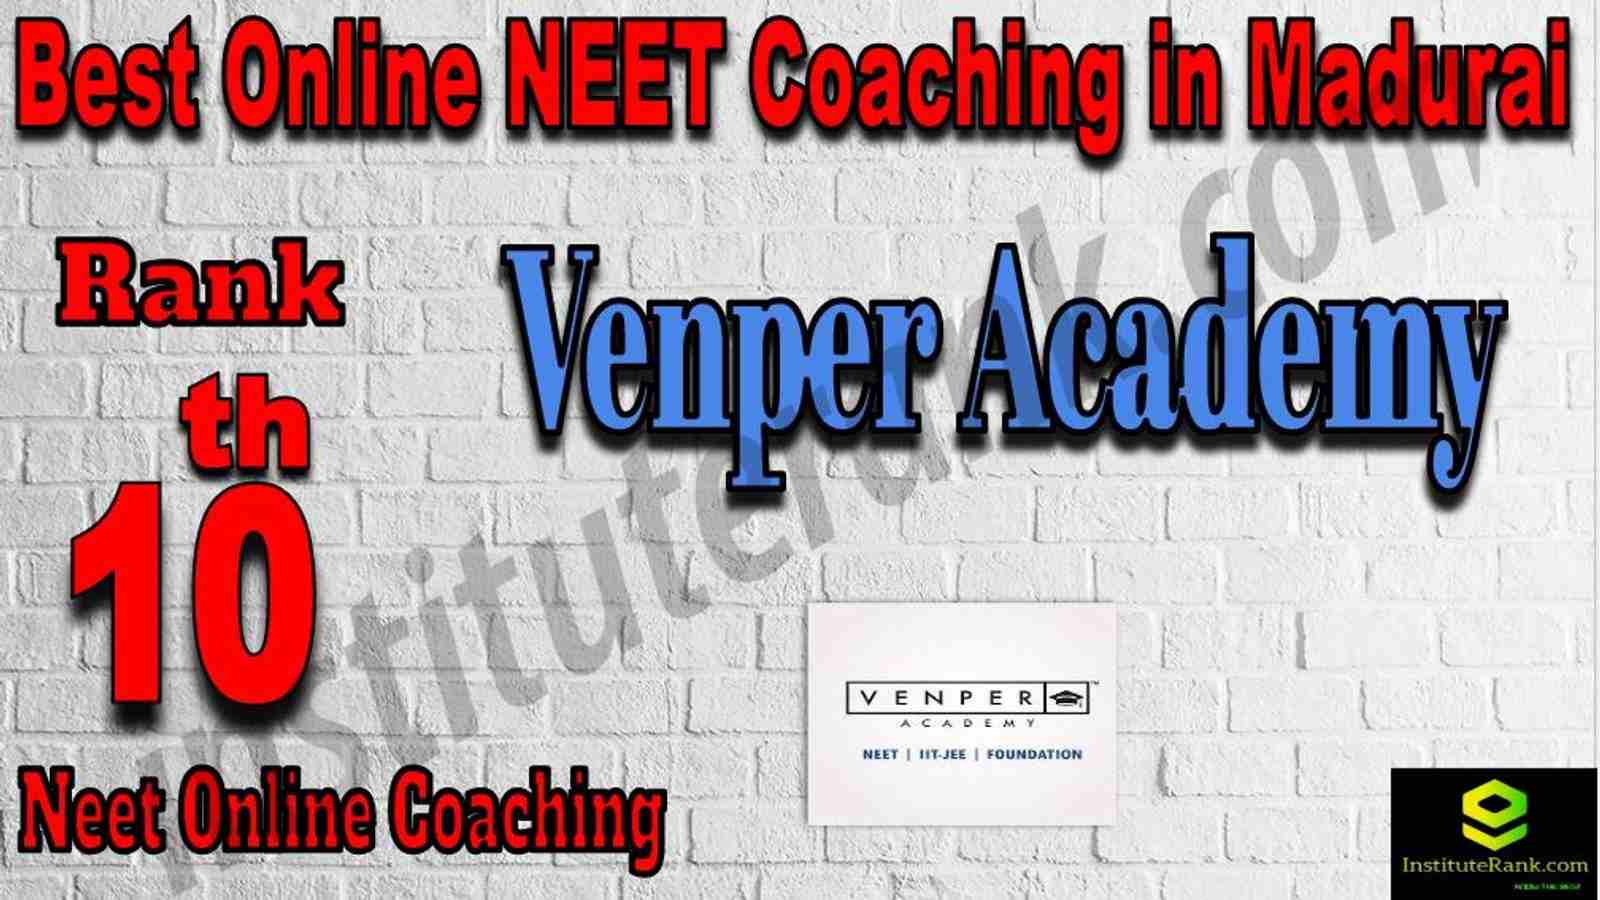 10th Best Online Neet Coaching in Madurai